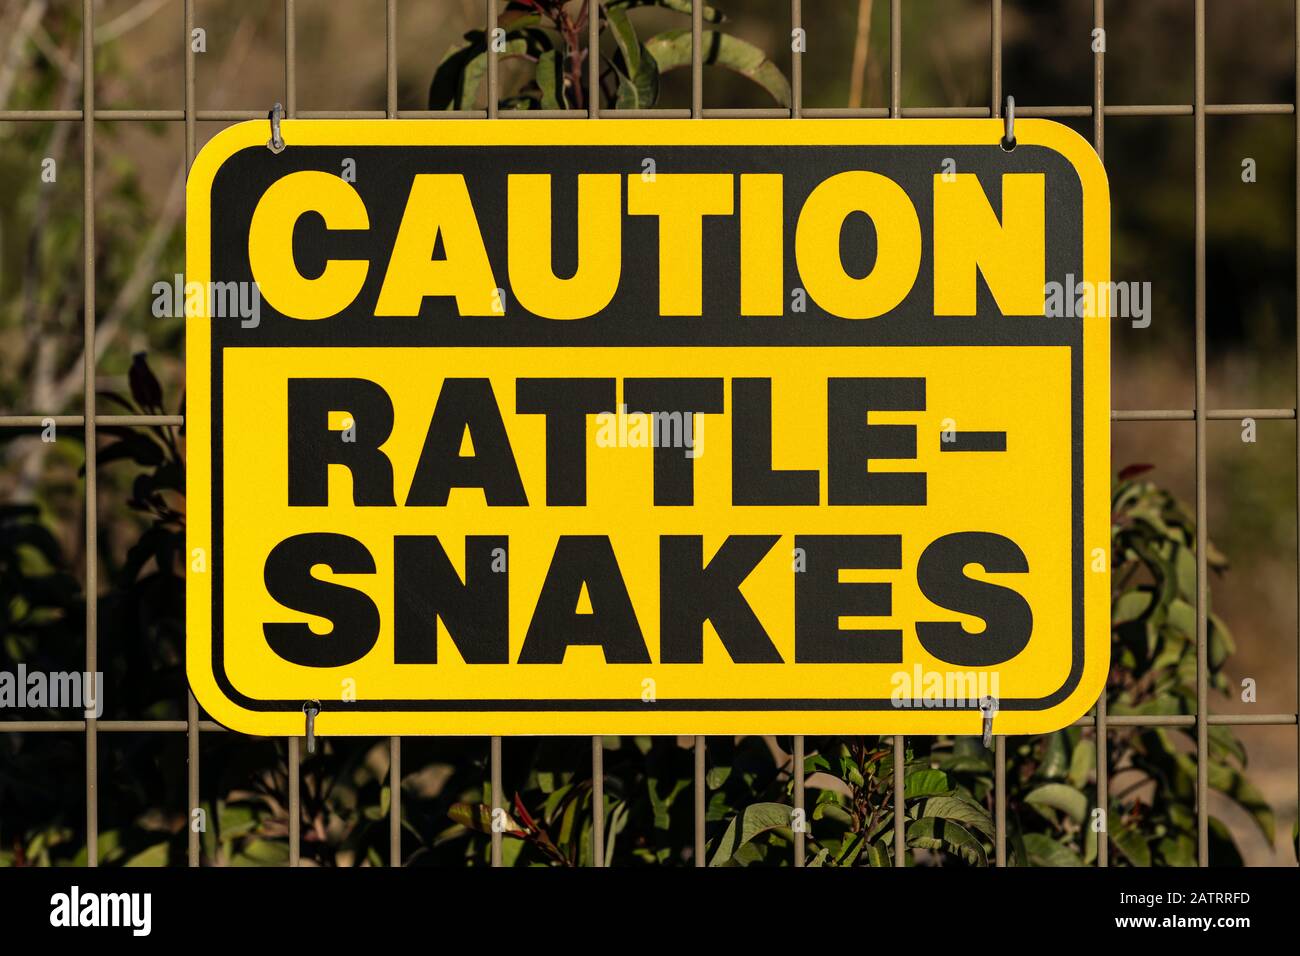 Caution Rattlesnakes wildlife warning sign on wire fence. Stock Photo